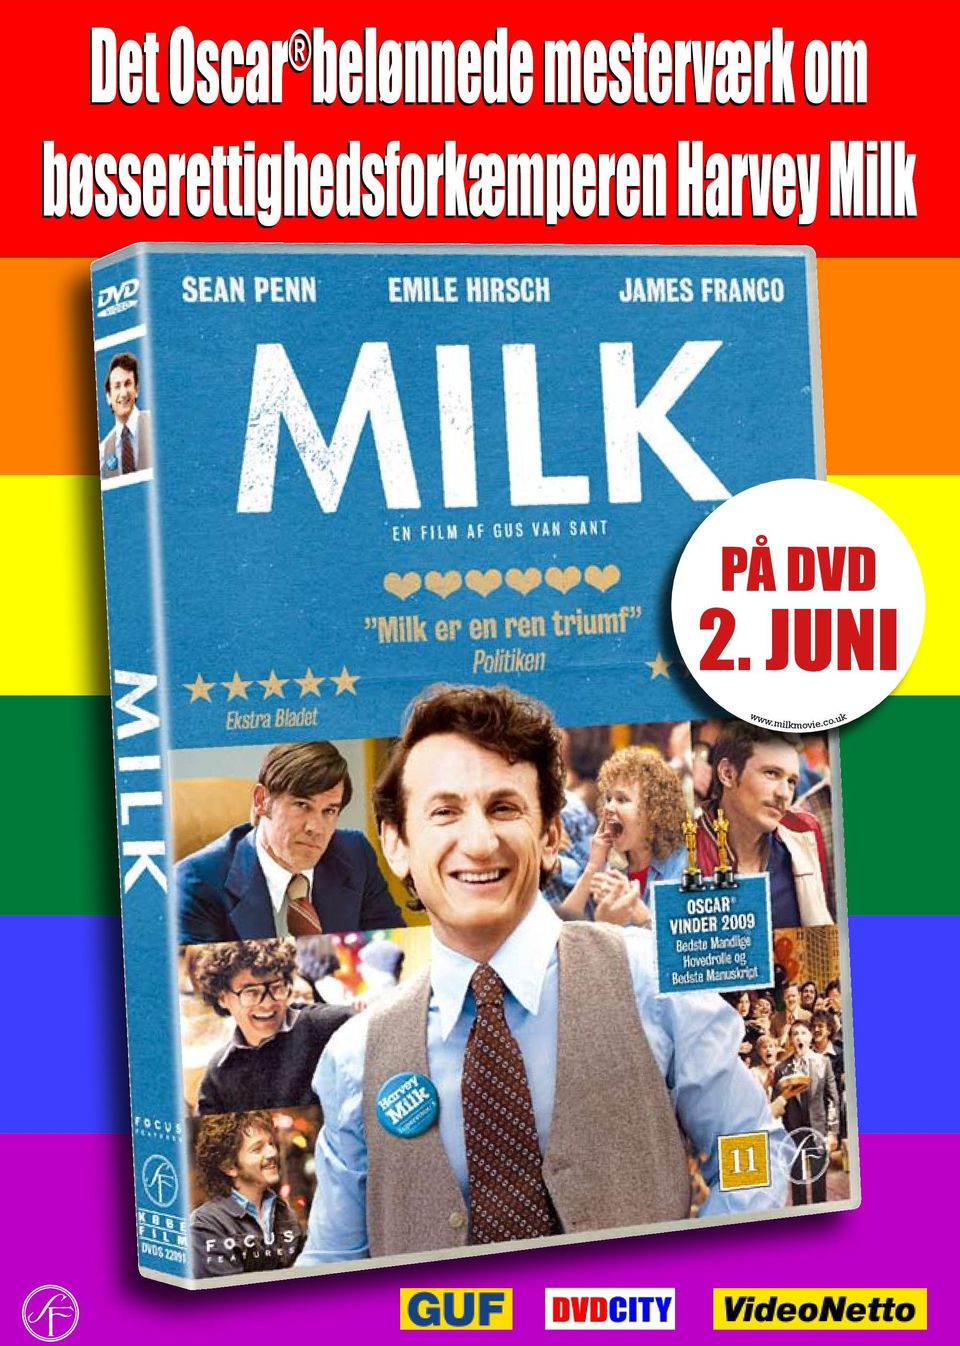 Harvey Milk PÅ DVD 2. JUNI www.